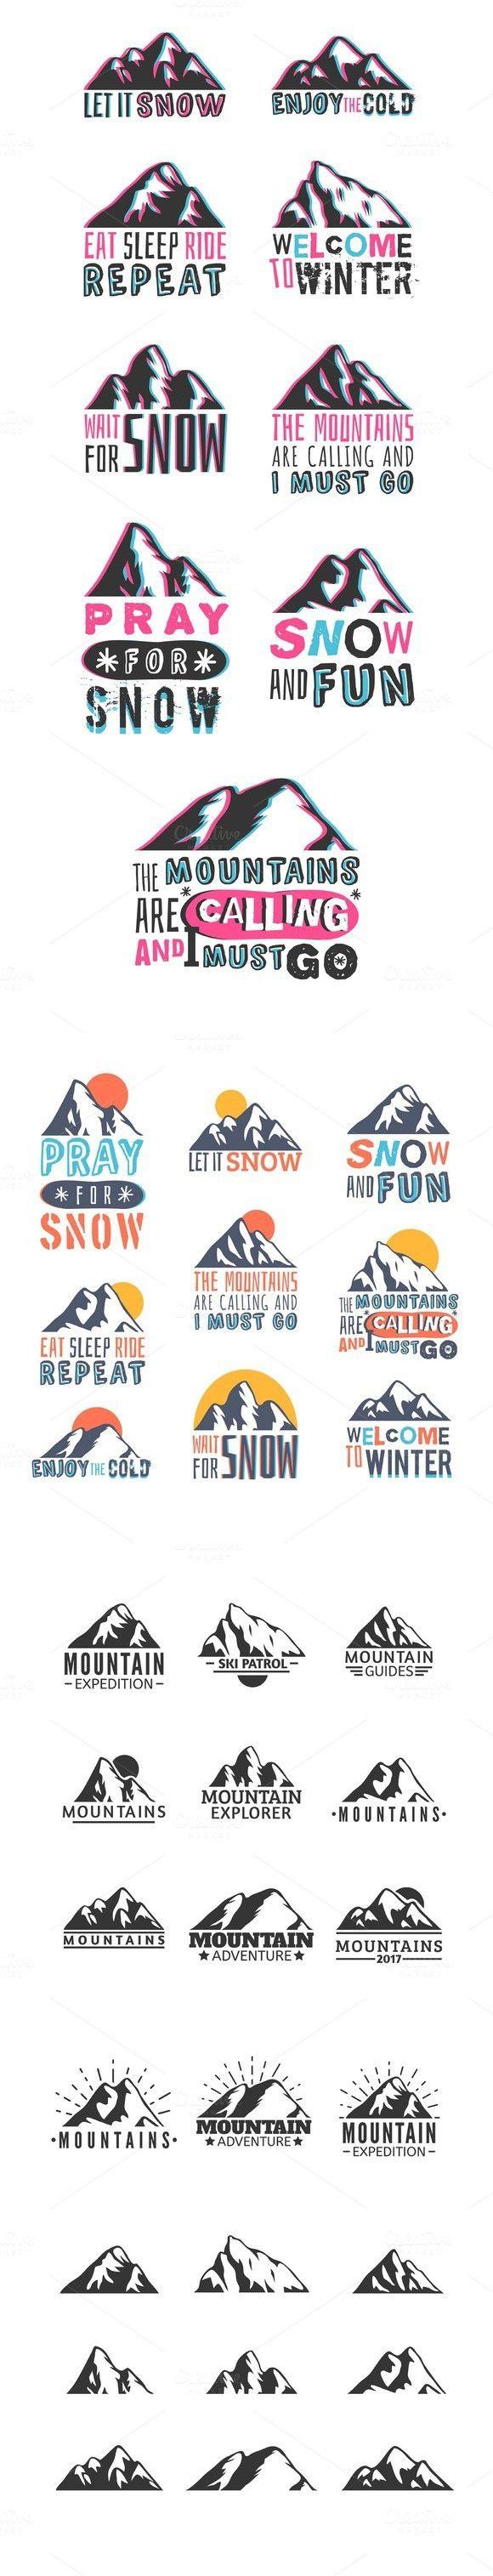 Hand Drawn Mountain Logo - Hand drawn mountains logo and badges. Mountain logos